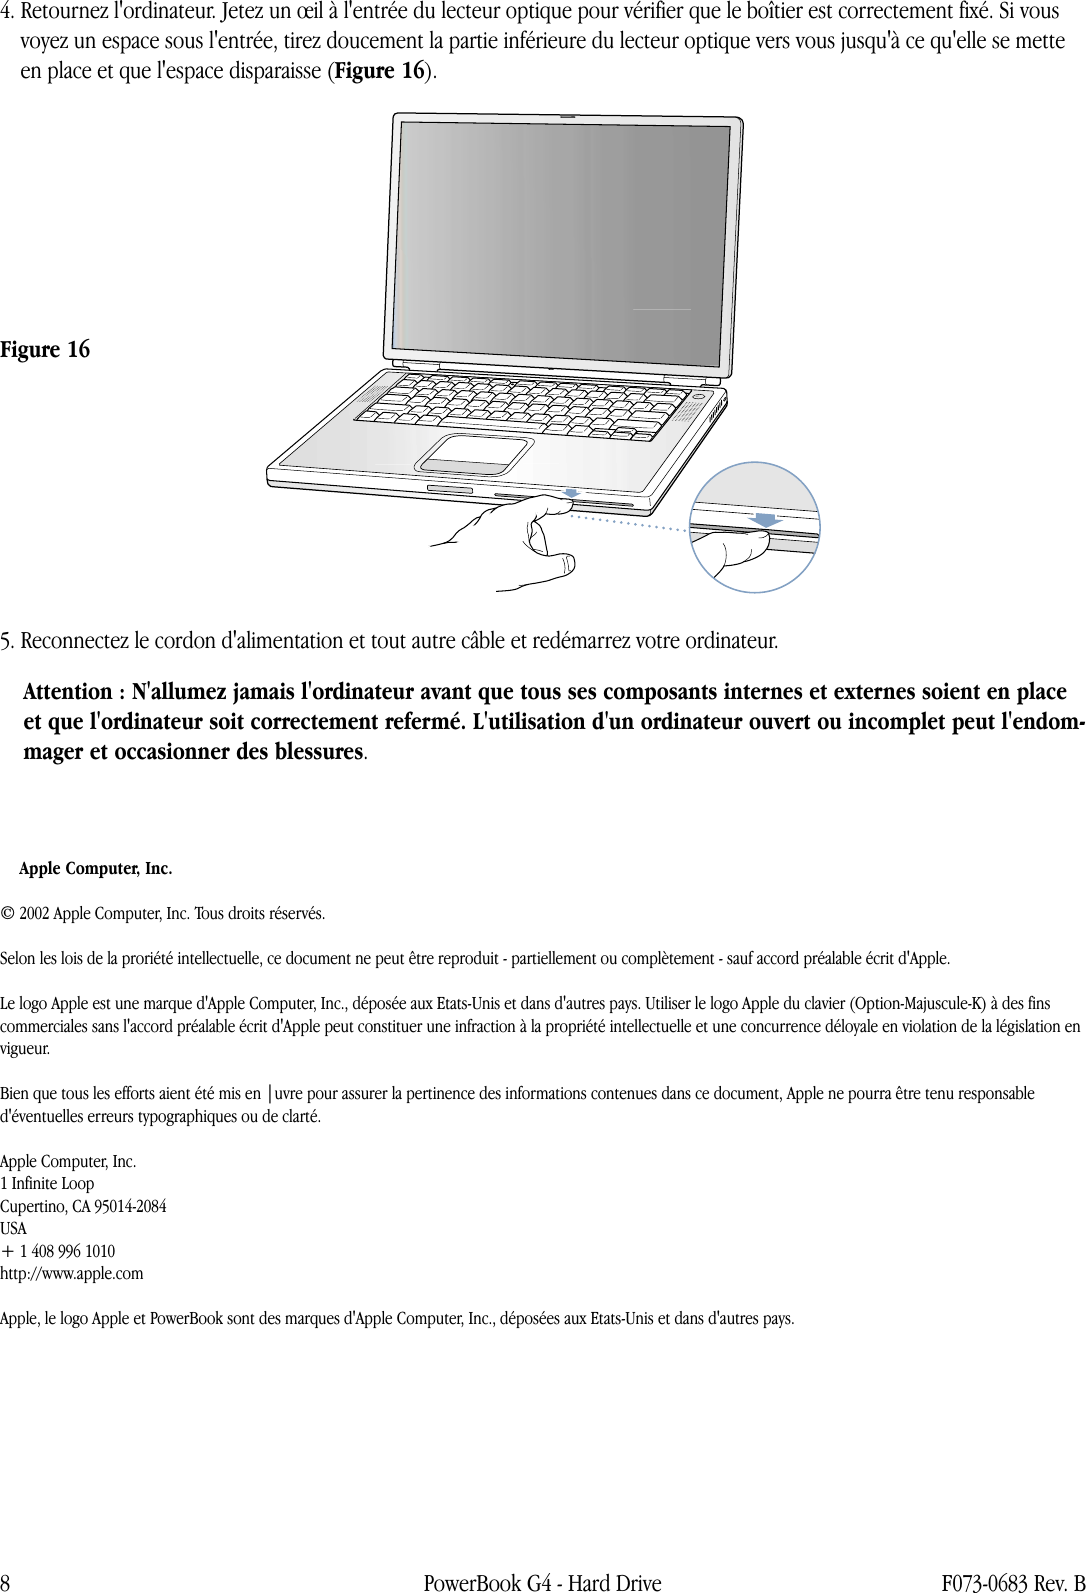 Page 8 of 8 - Apple PowerBook G4 (DVI) Hard Drive User Manual Power Book G4 (DVI, 1GHz/867MHz) - Disque Dur Instructions De Remplacement Pbg4dvi-hd-cip